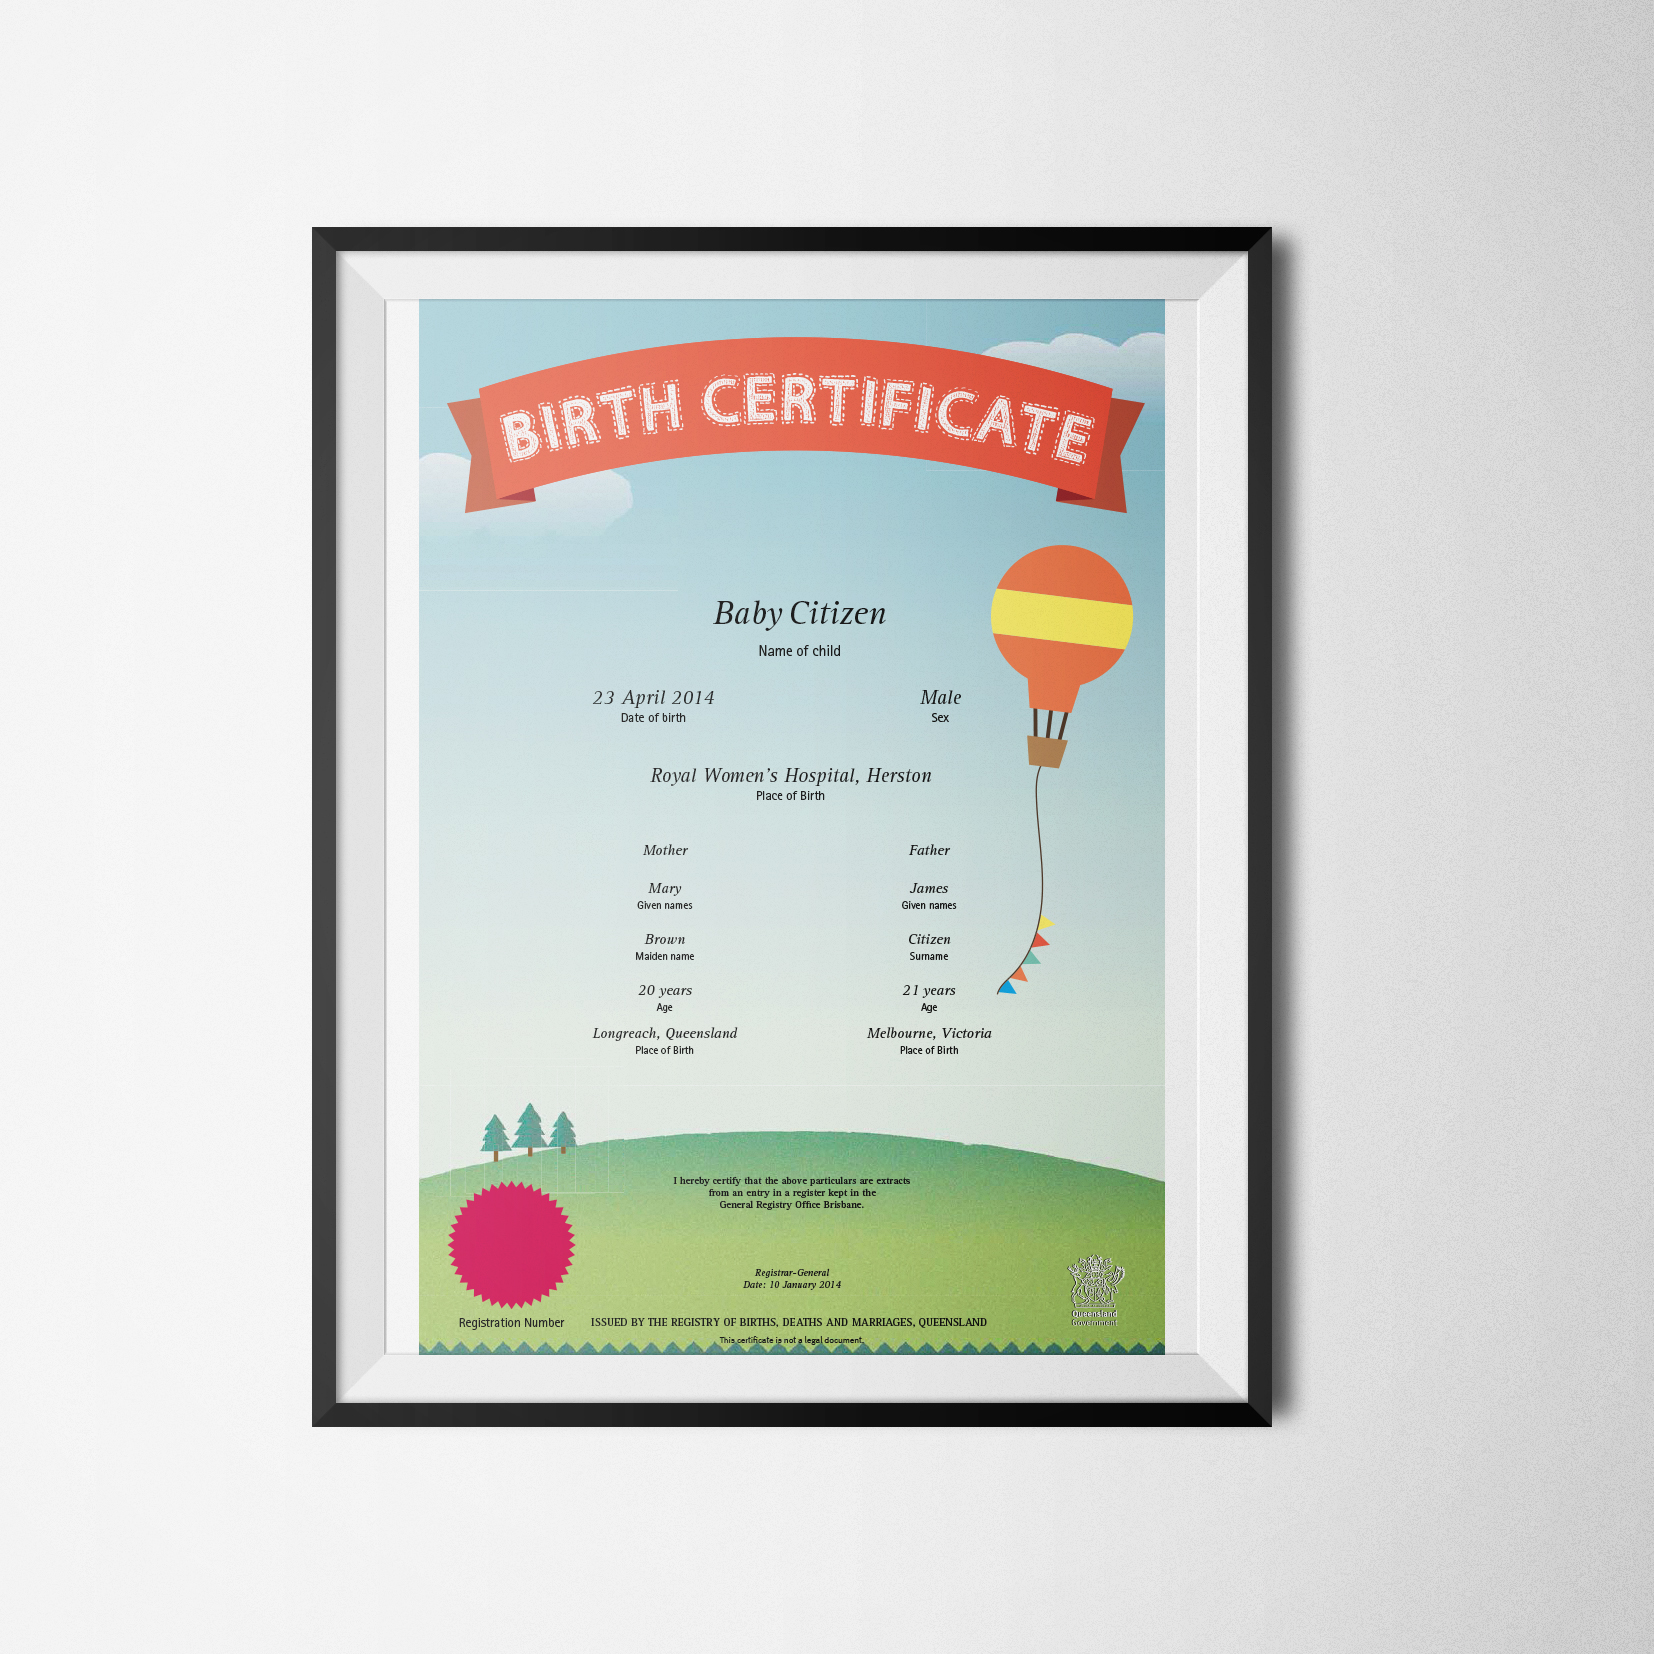 Commemorative Birt Certificate 